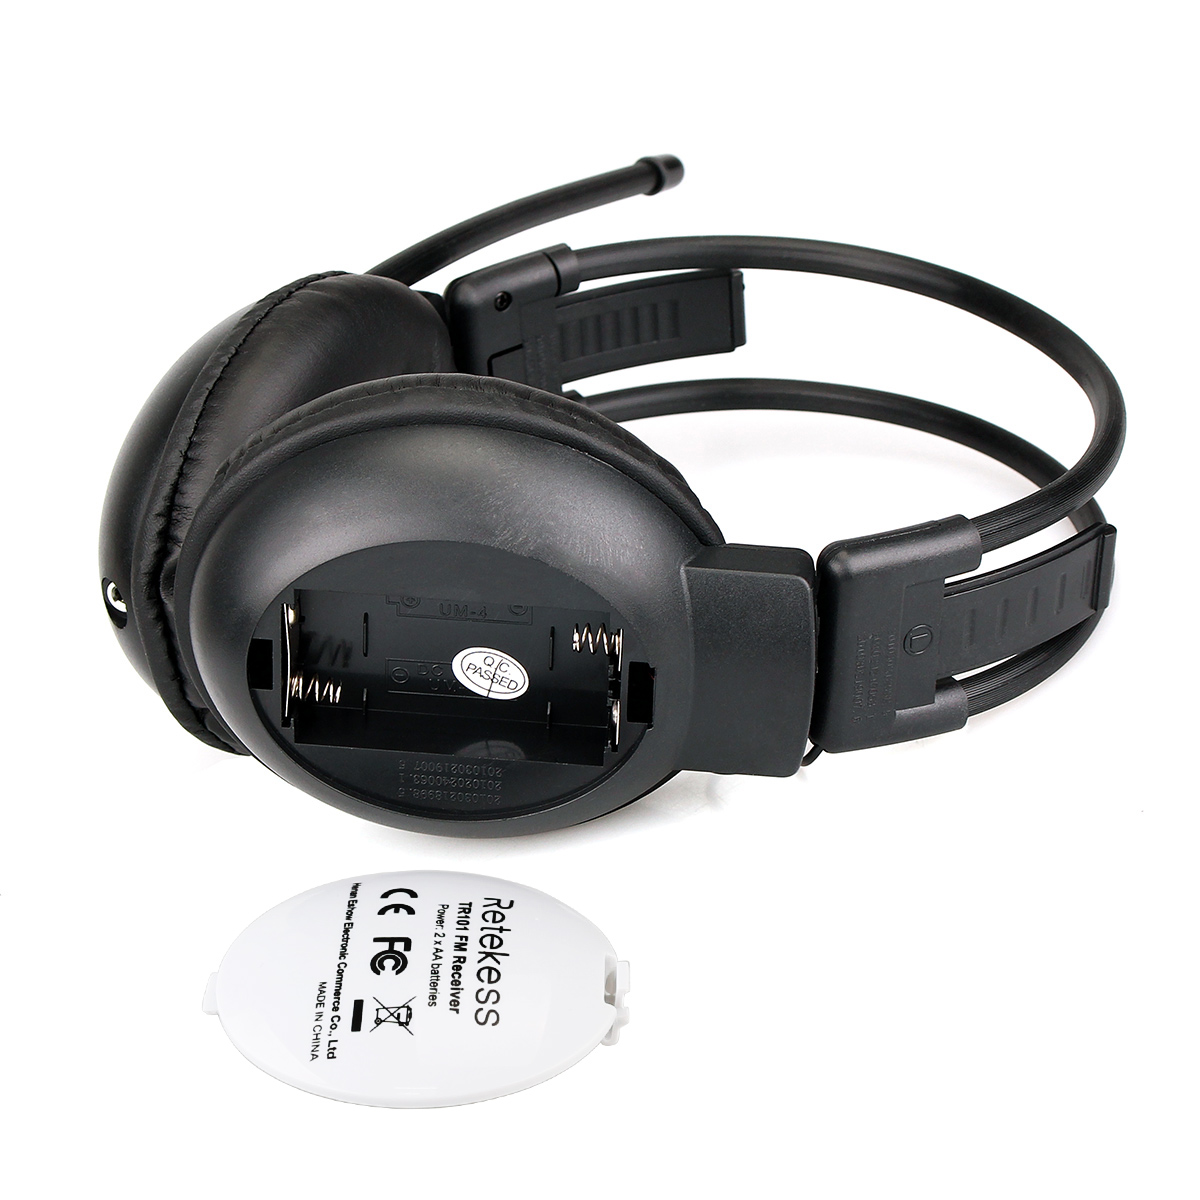 TR101 Tragbares FM-Headset Radio Faltbarer Kopfhörer Stereo Meeting/Campus/Gift 